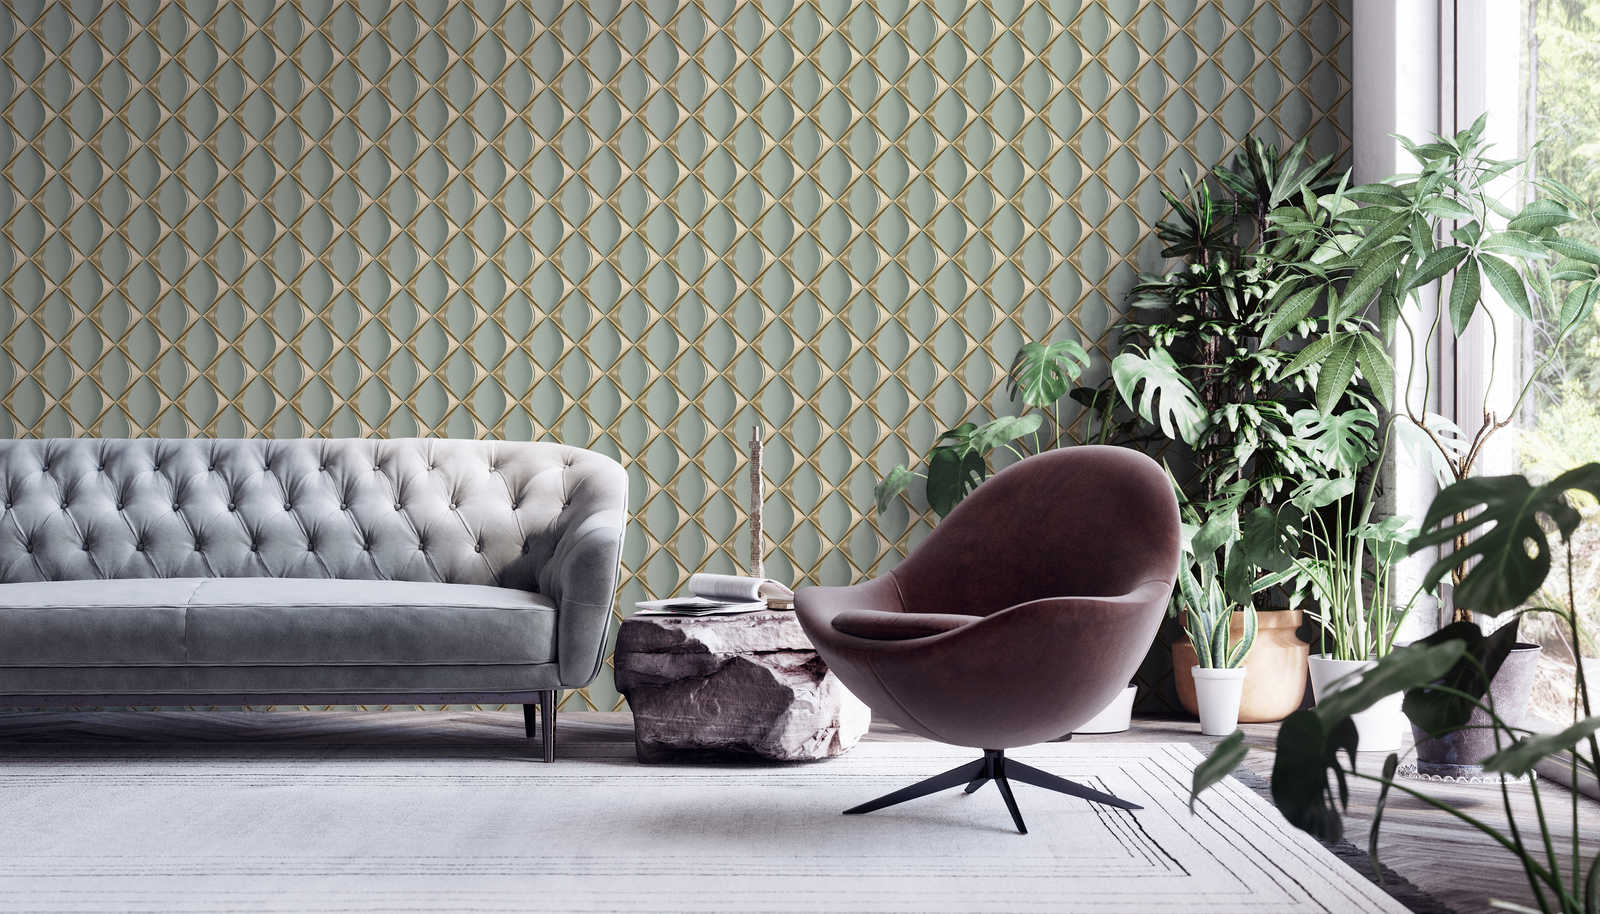             Wallpaper 3D design with metallic facets pattern - green, metallic
        